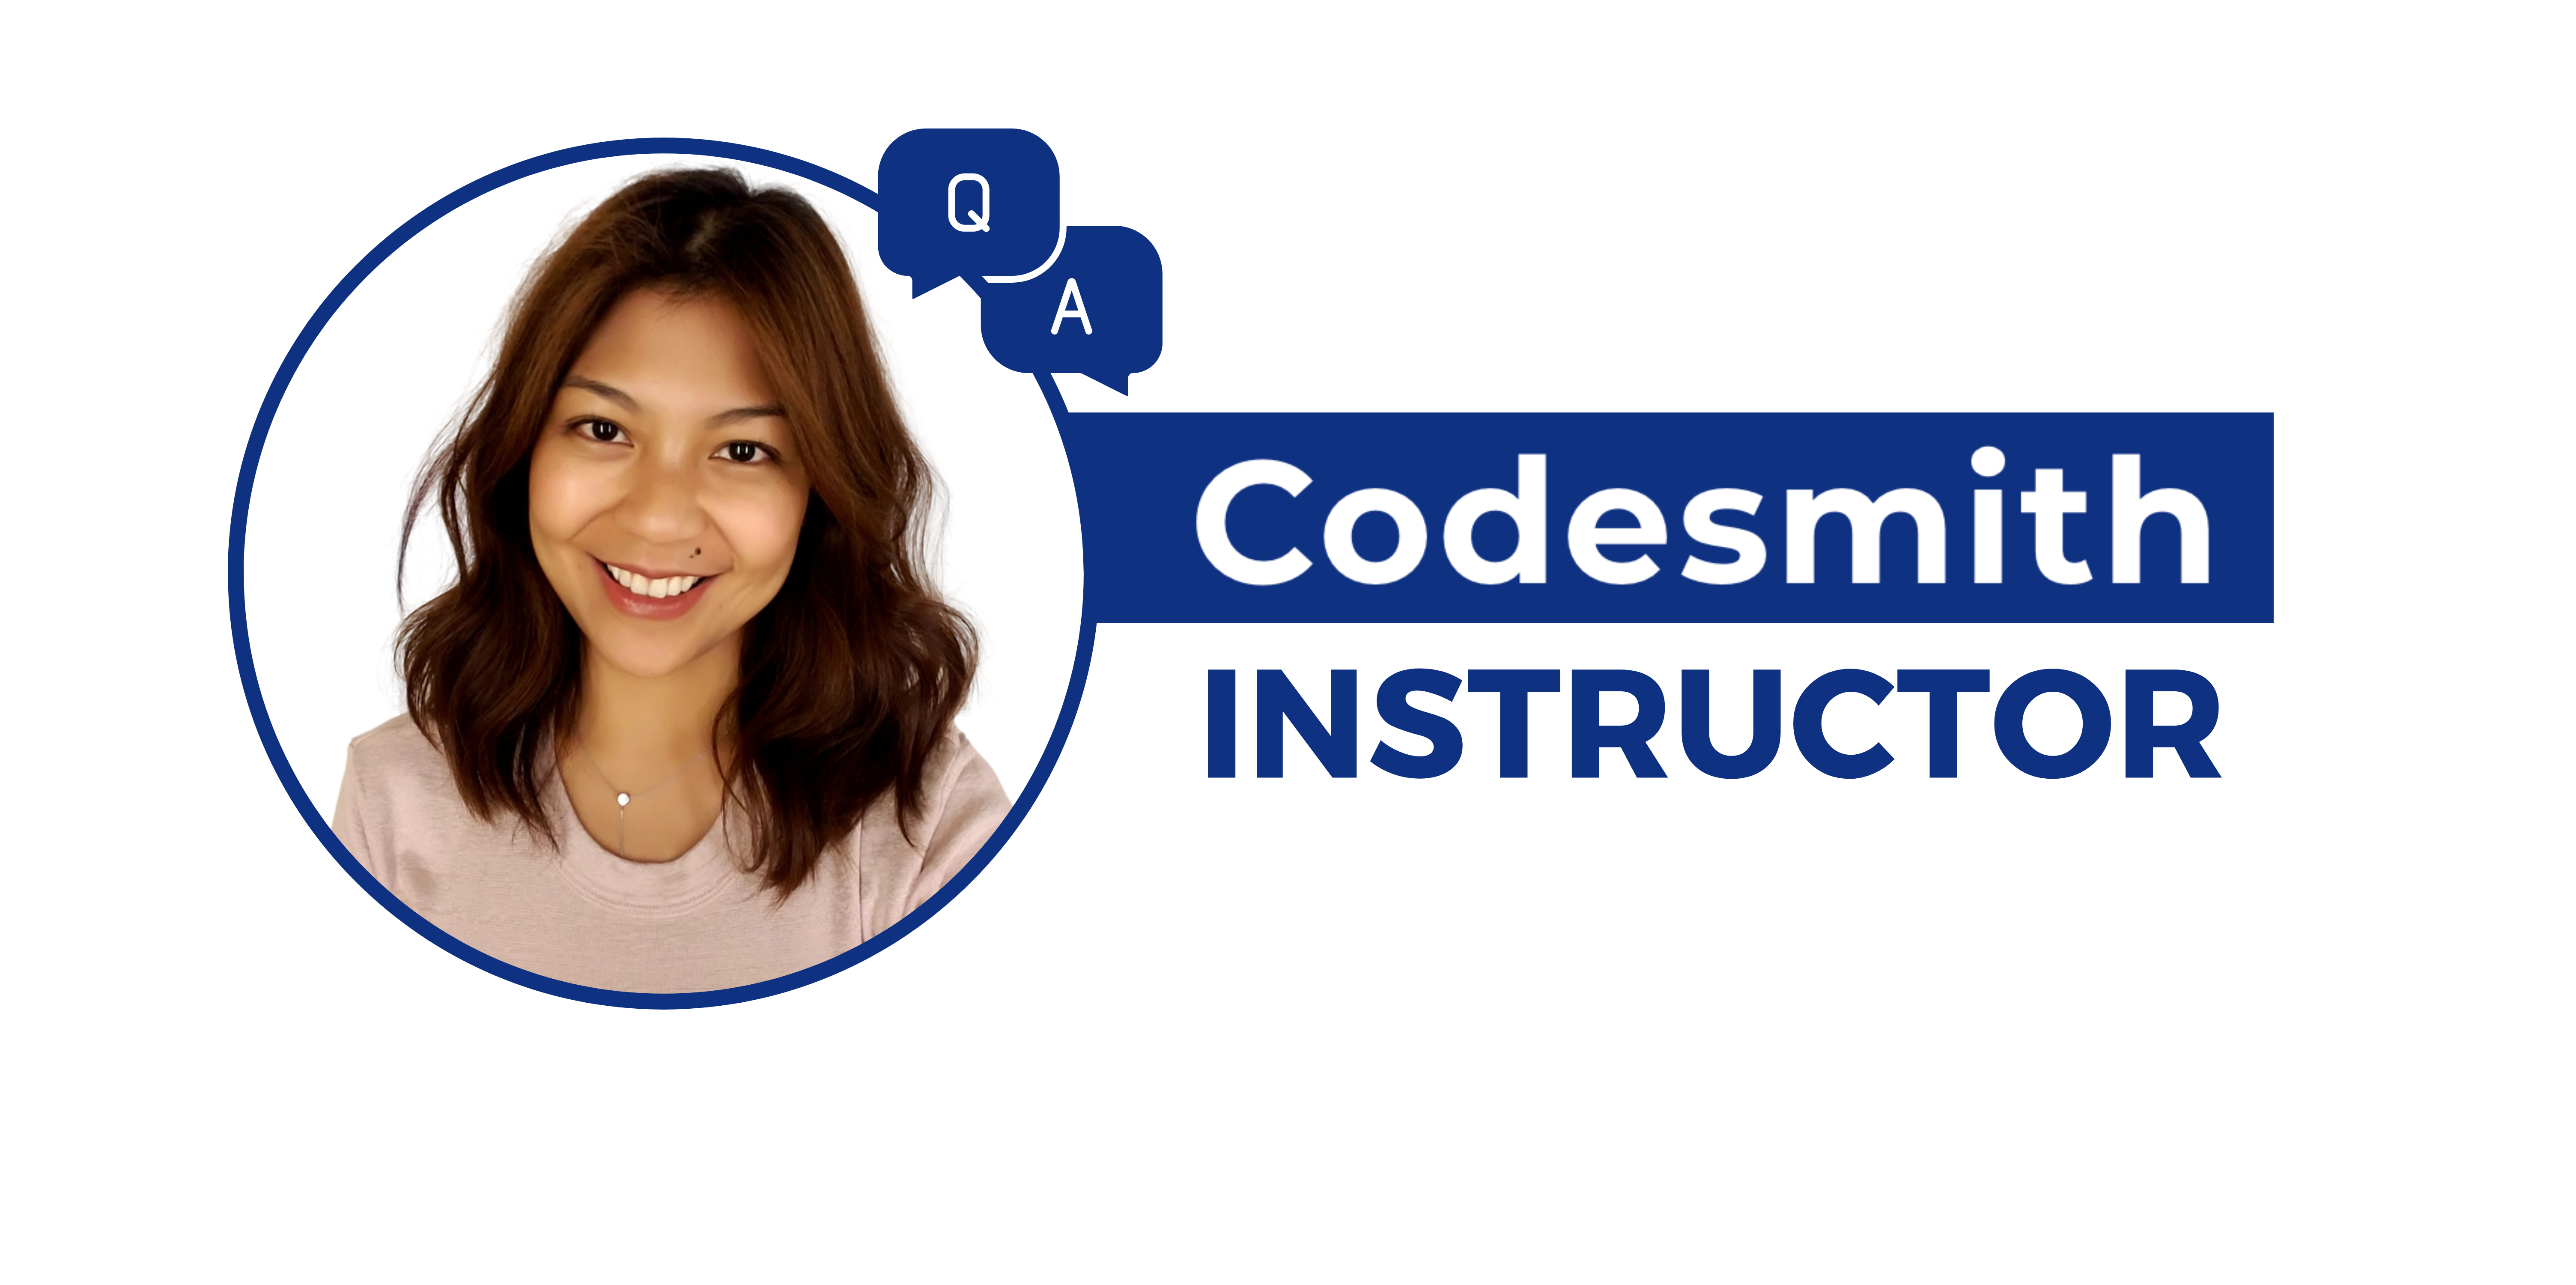 Image of Codesmith instructor Katrina Villanueva with text that reads Codesmith instructor Q&A